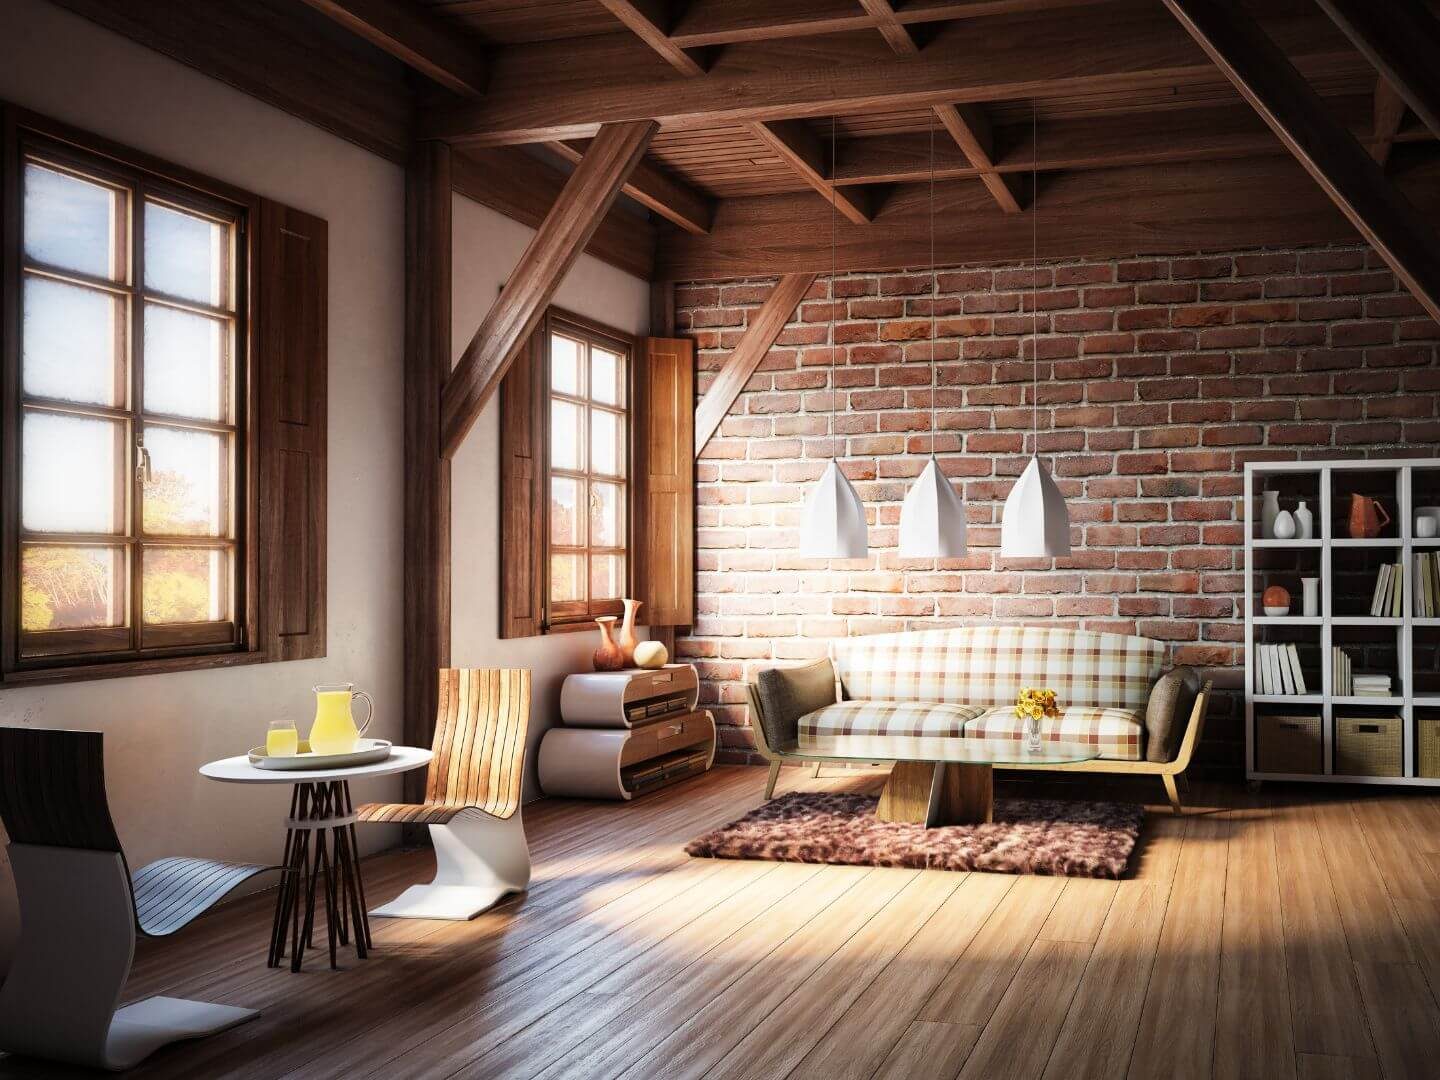 rustic interior style